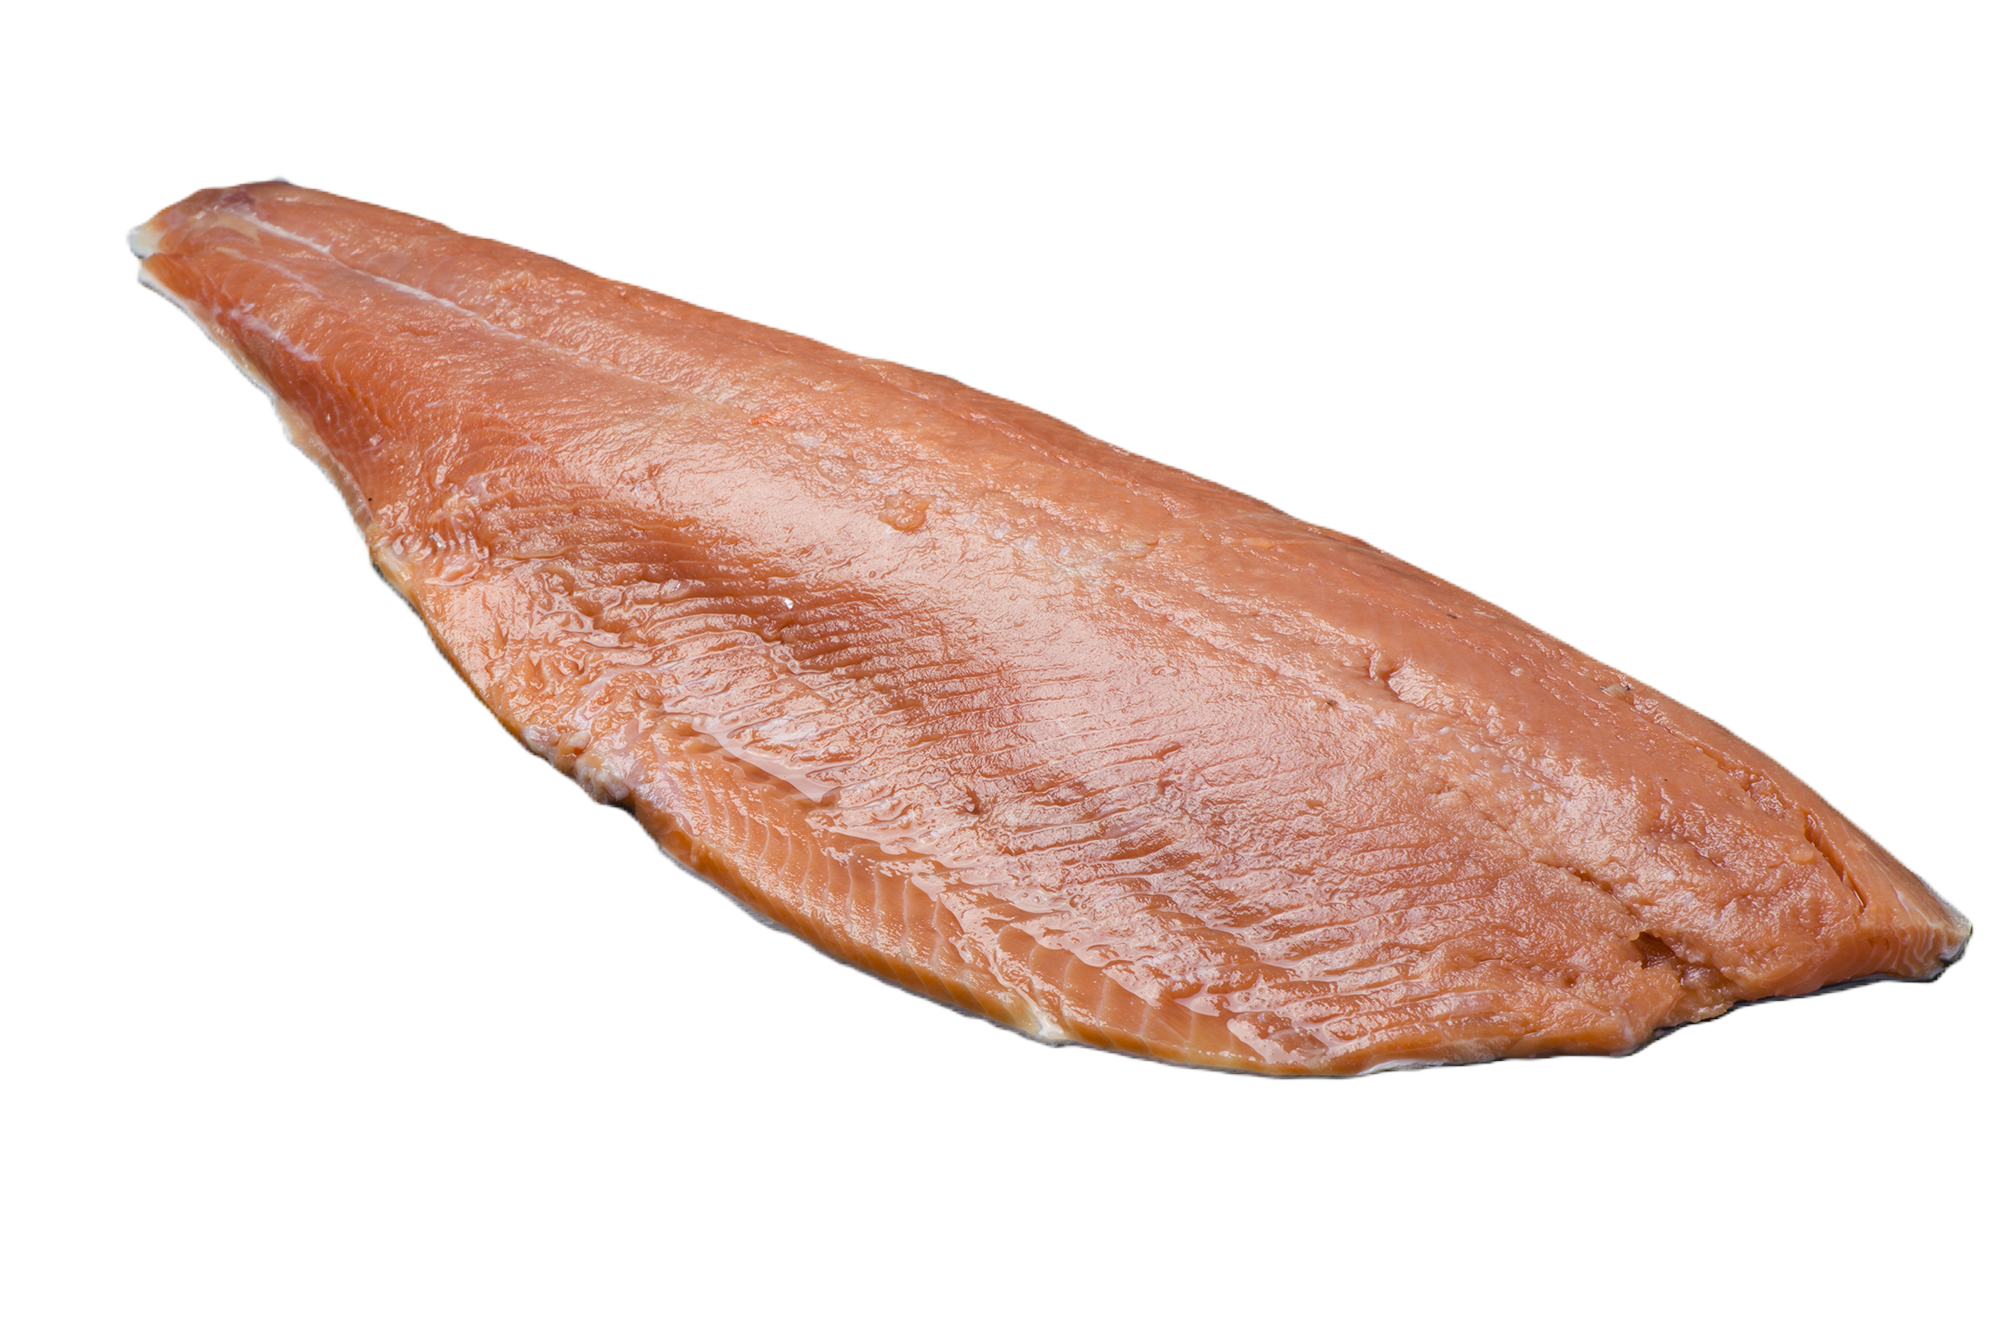 Filete de salmón